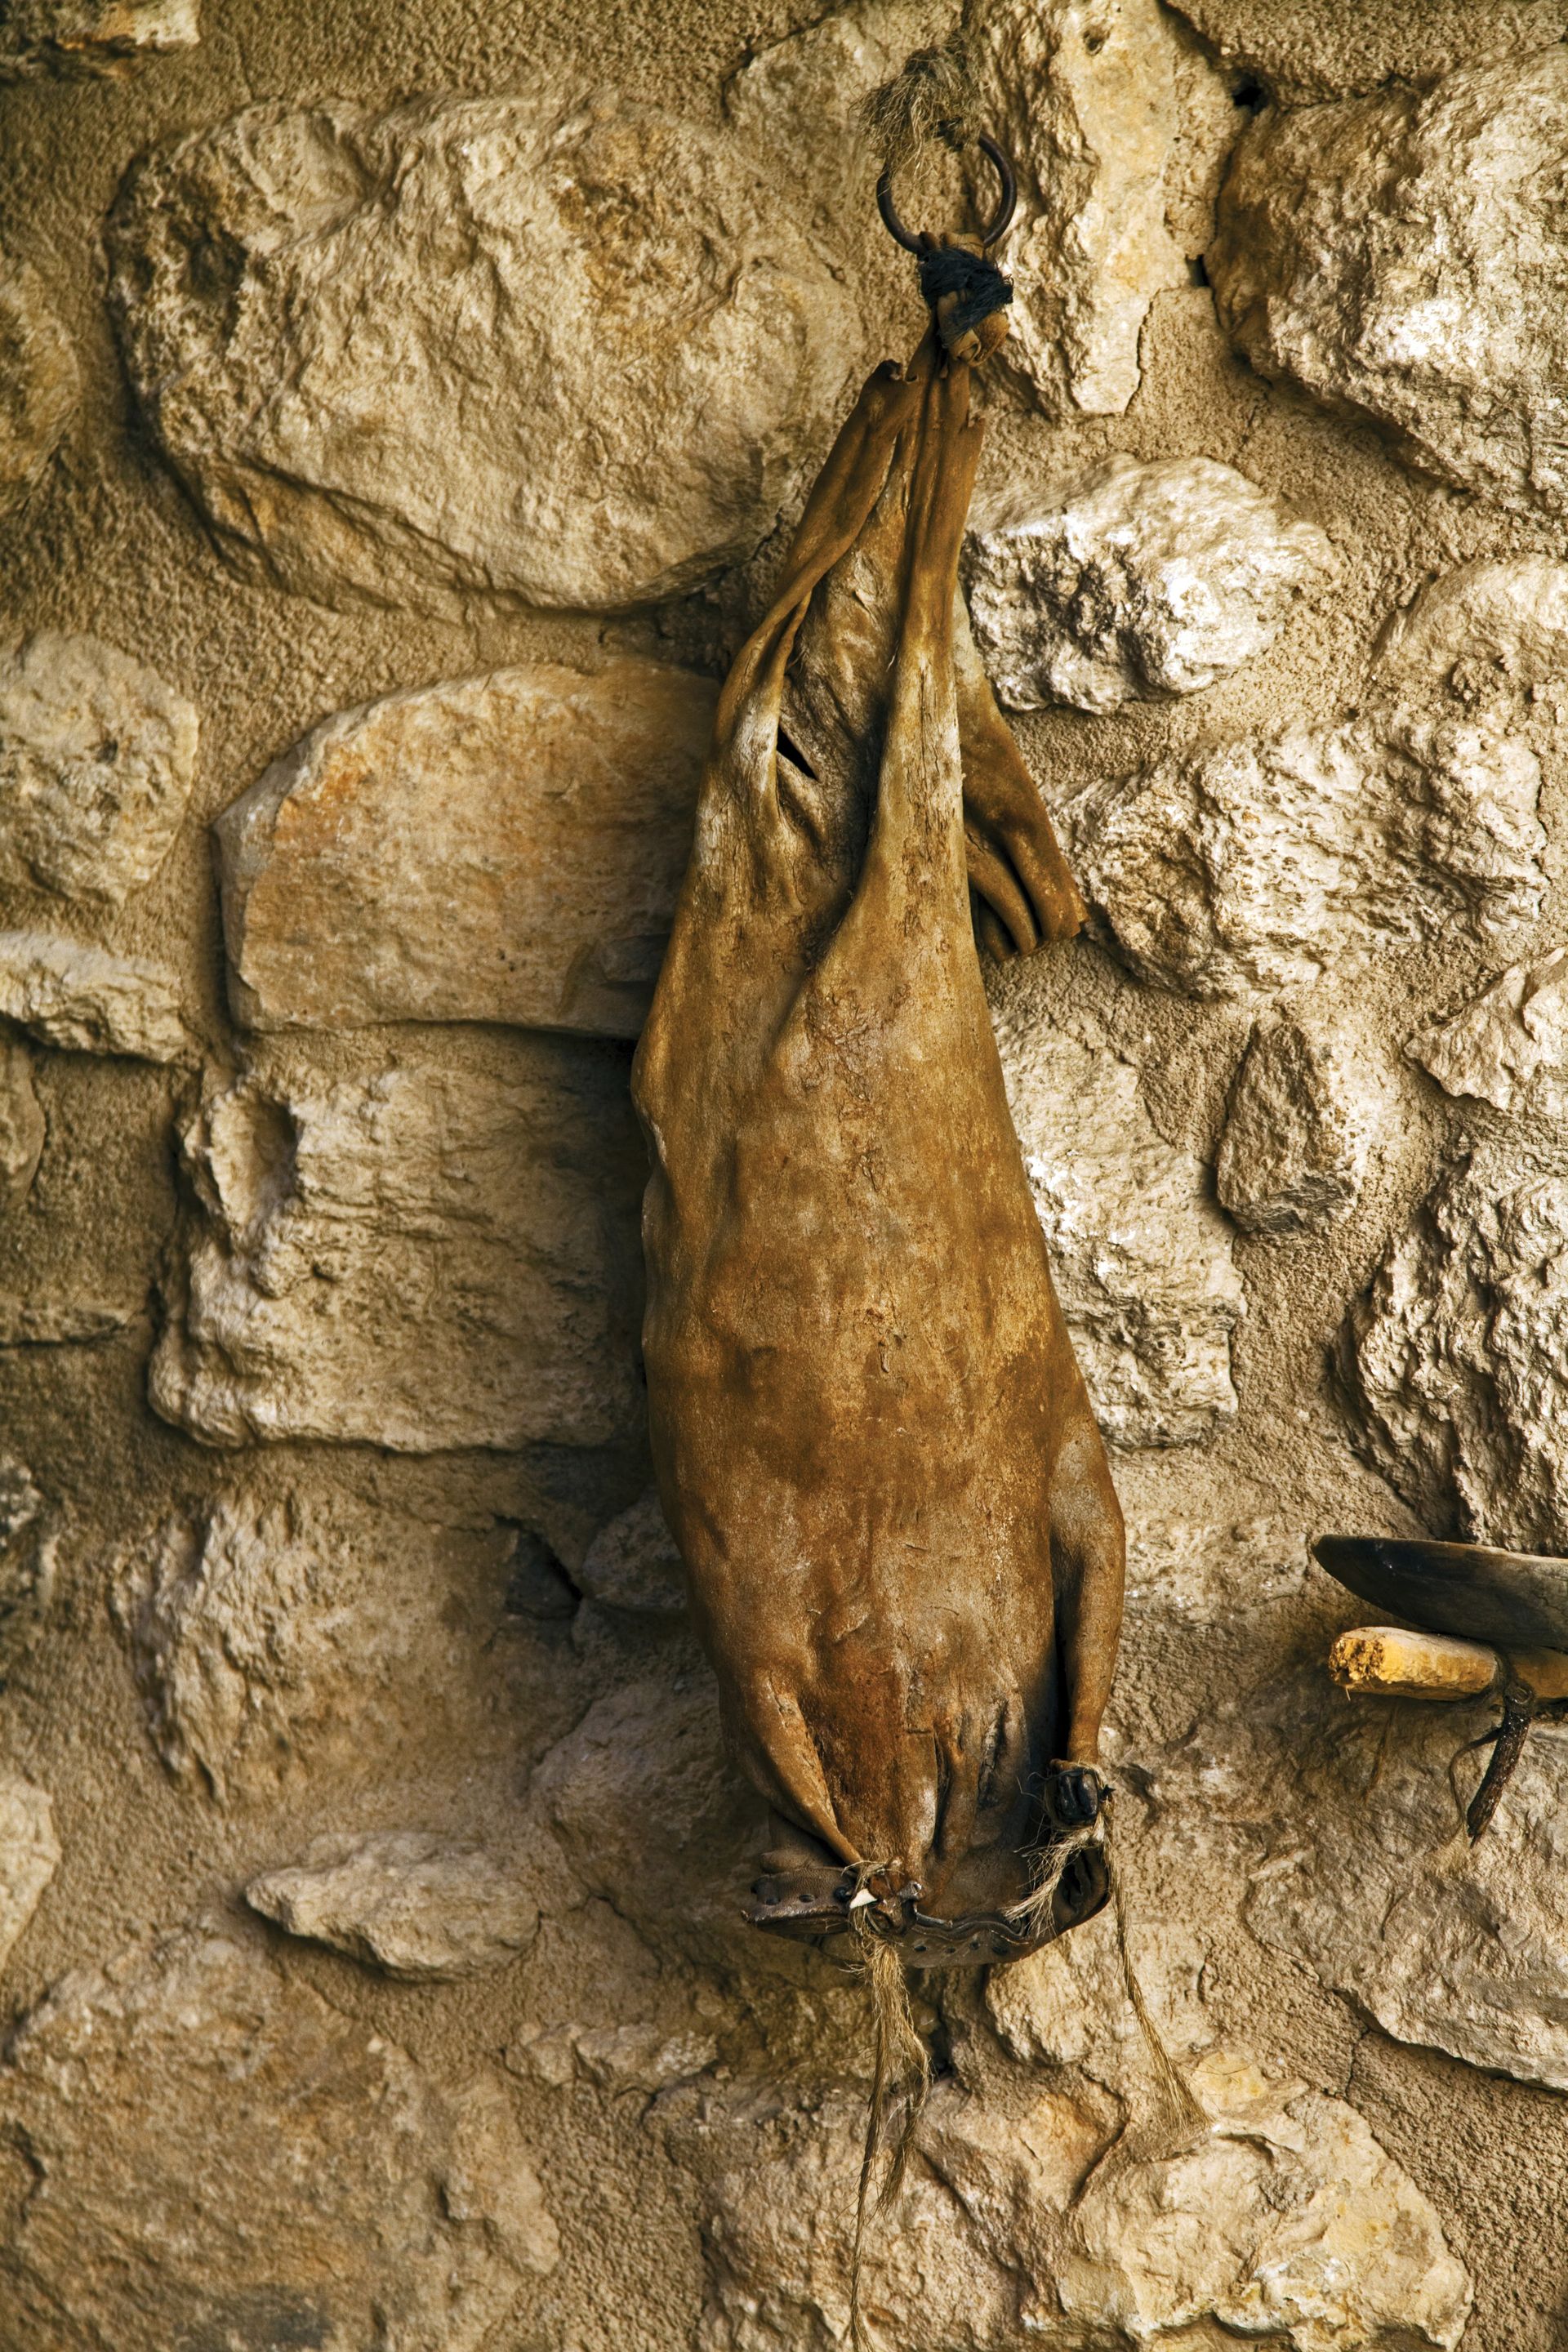 A wineskin lying on a stone path.